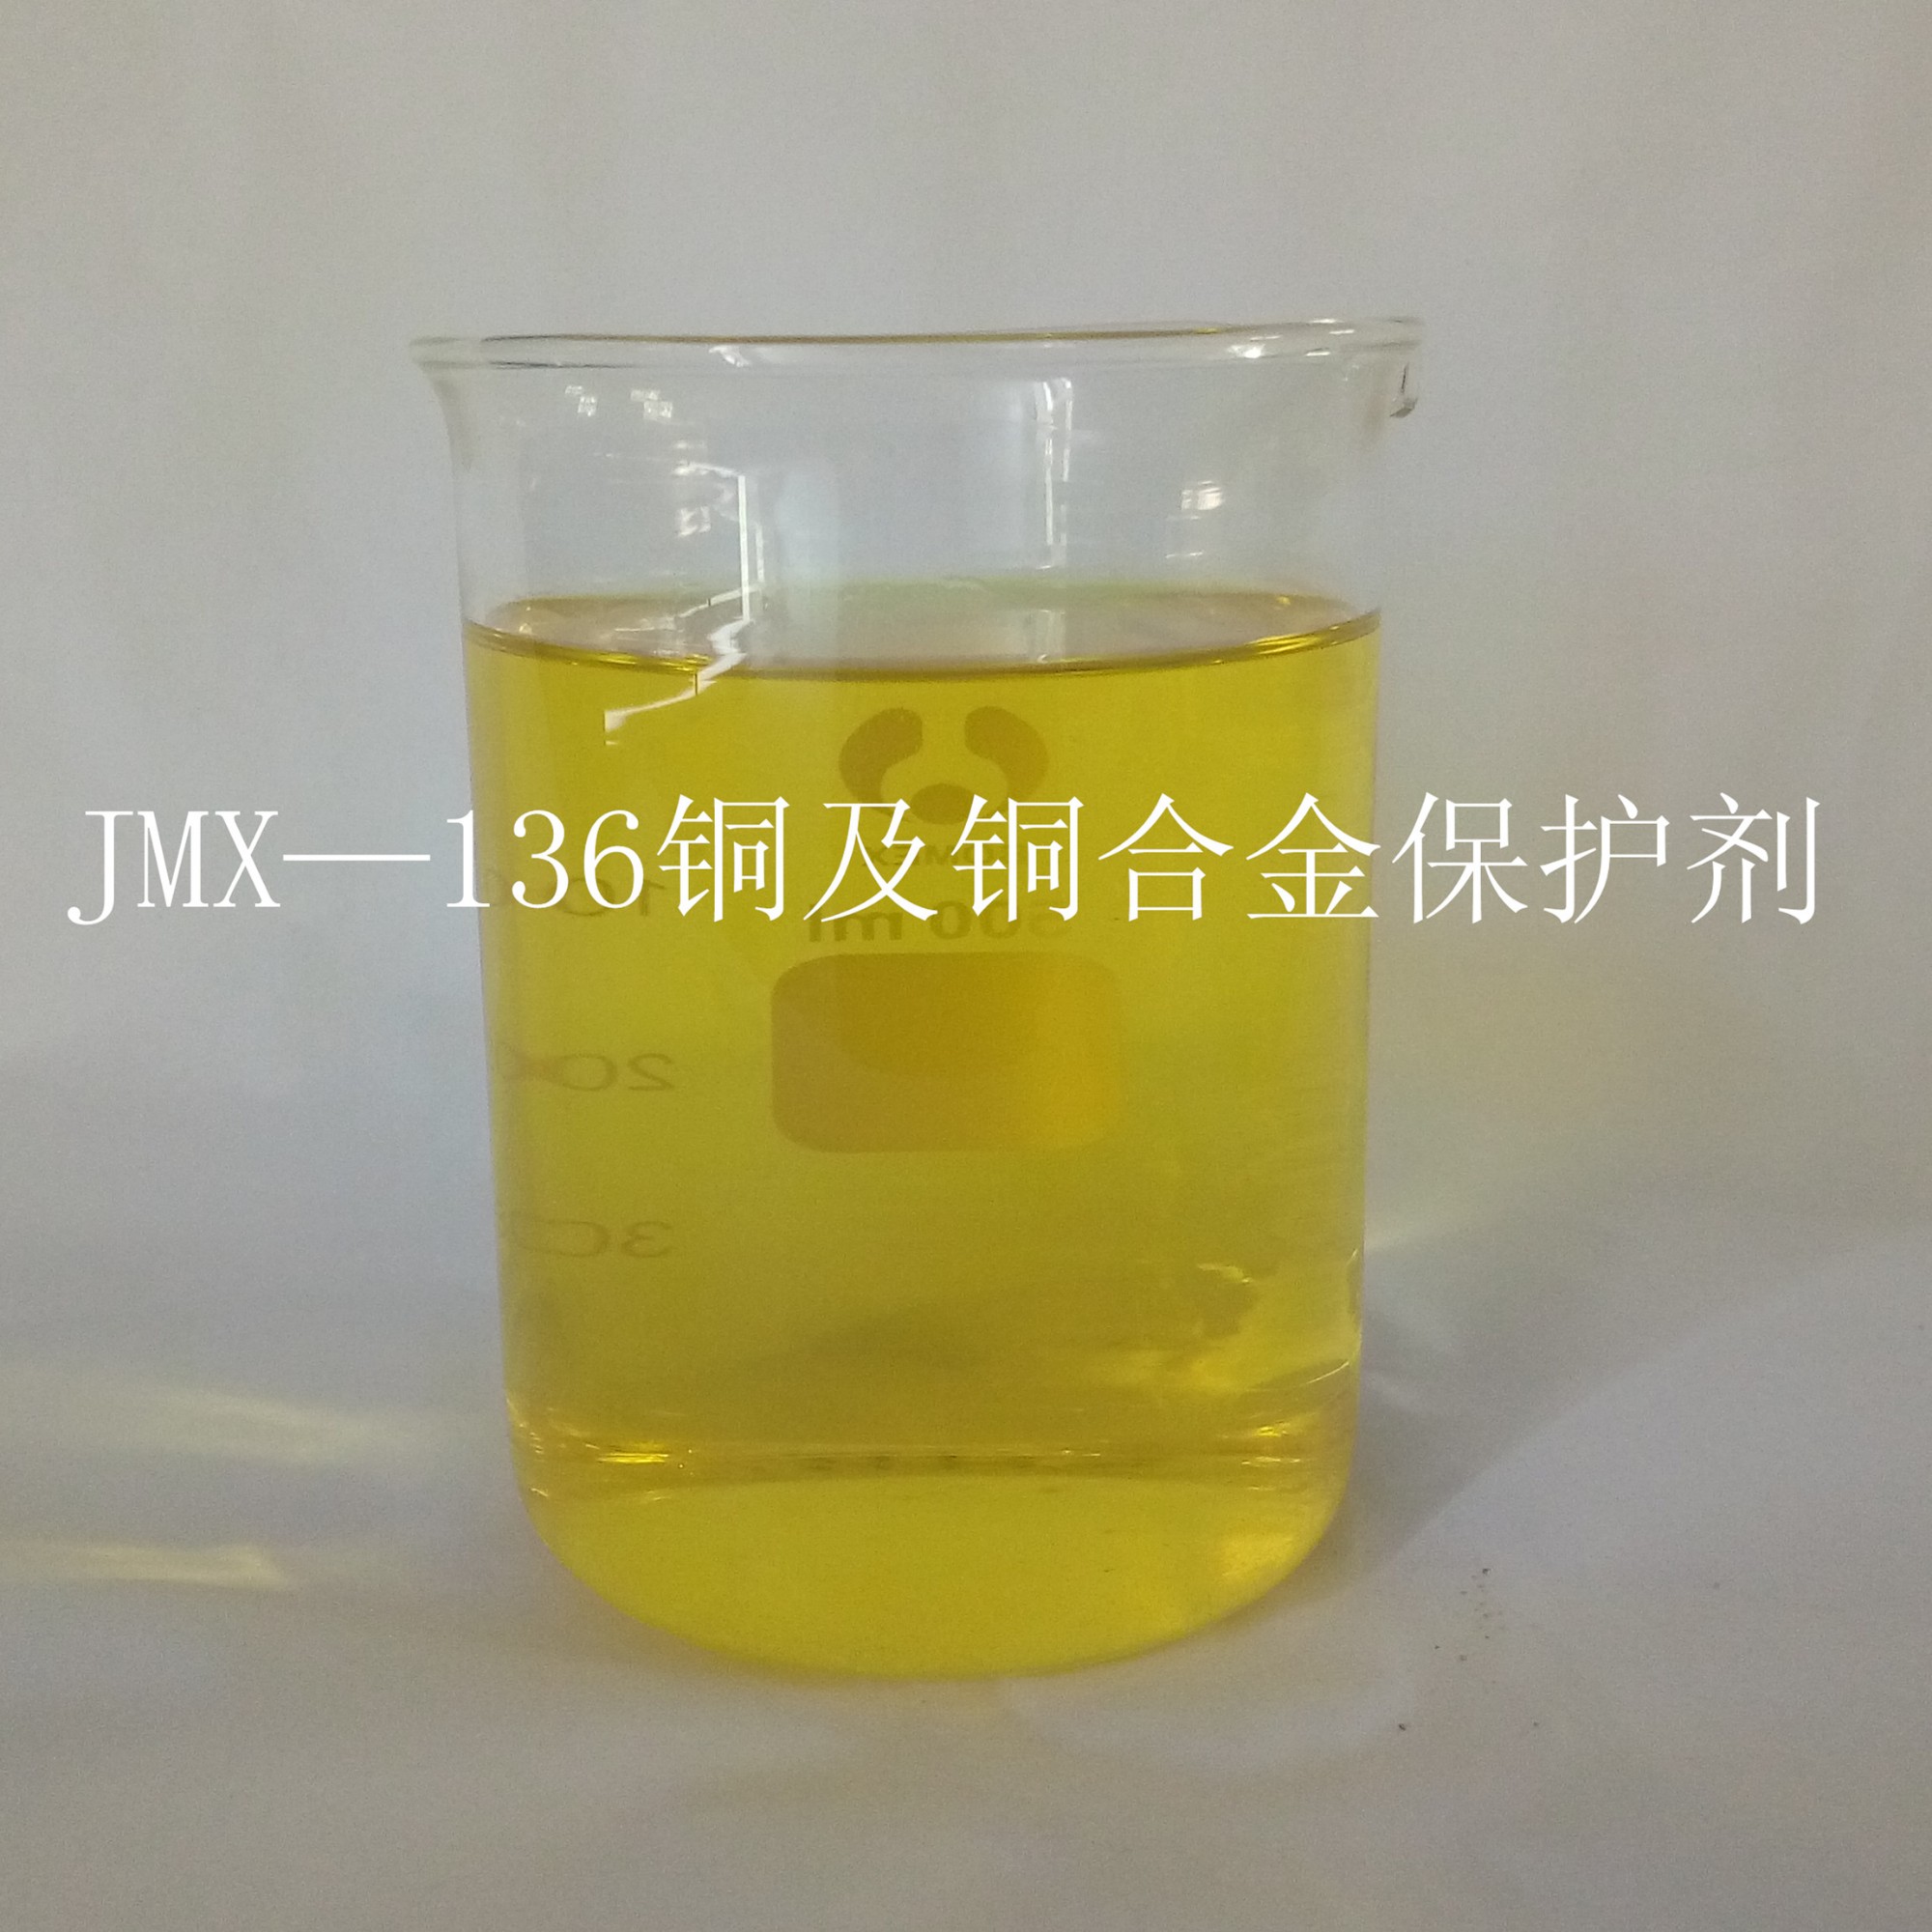 JMX—136铜及铜合金保护剂（铜防变色剂）